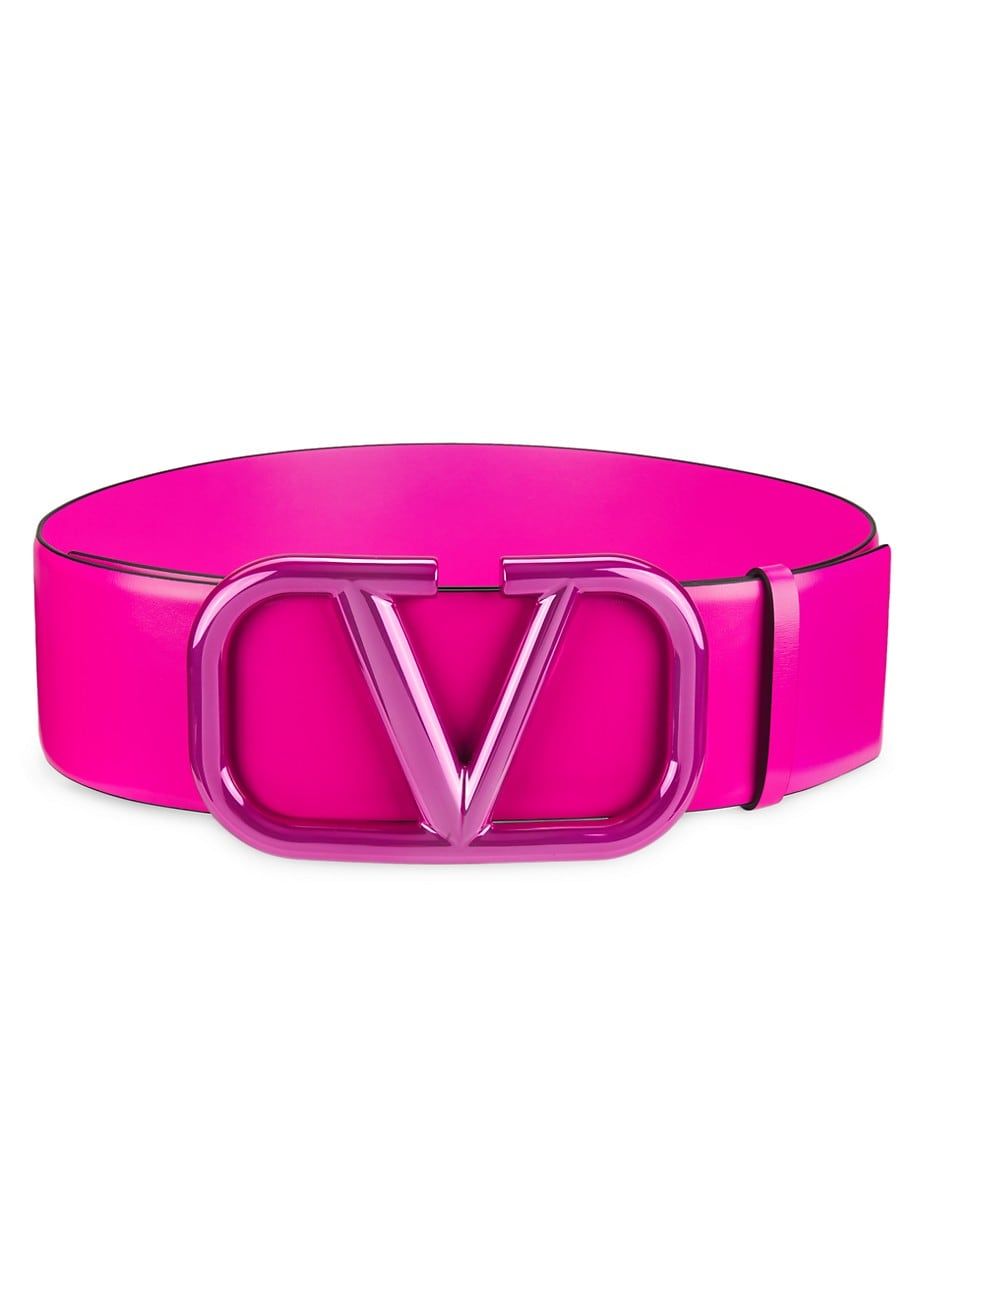 VLogo Leather Anodized Belt | Saks Fifth Avenue